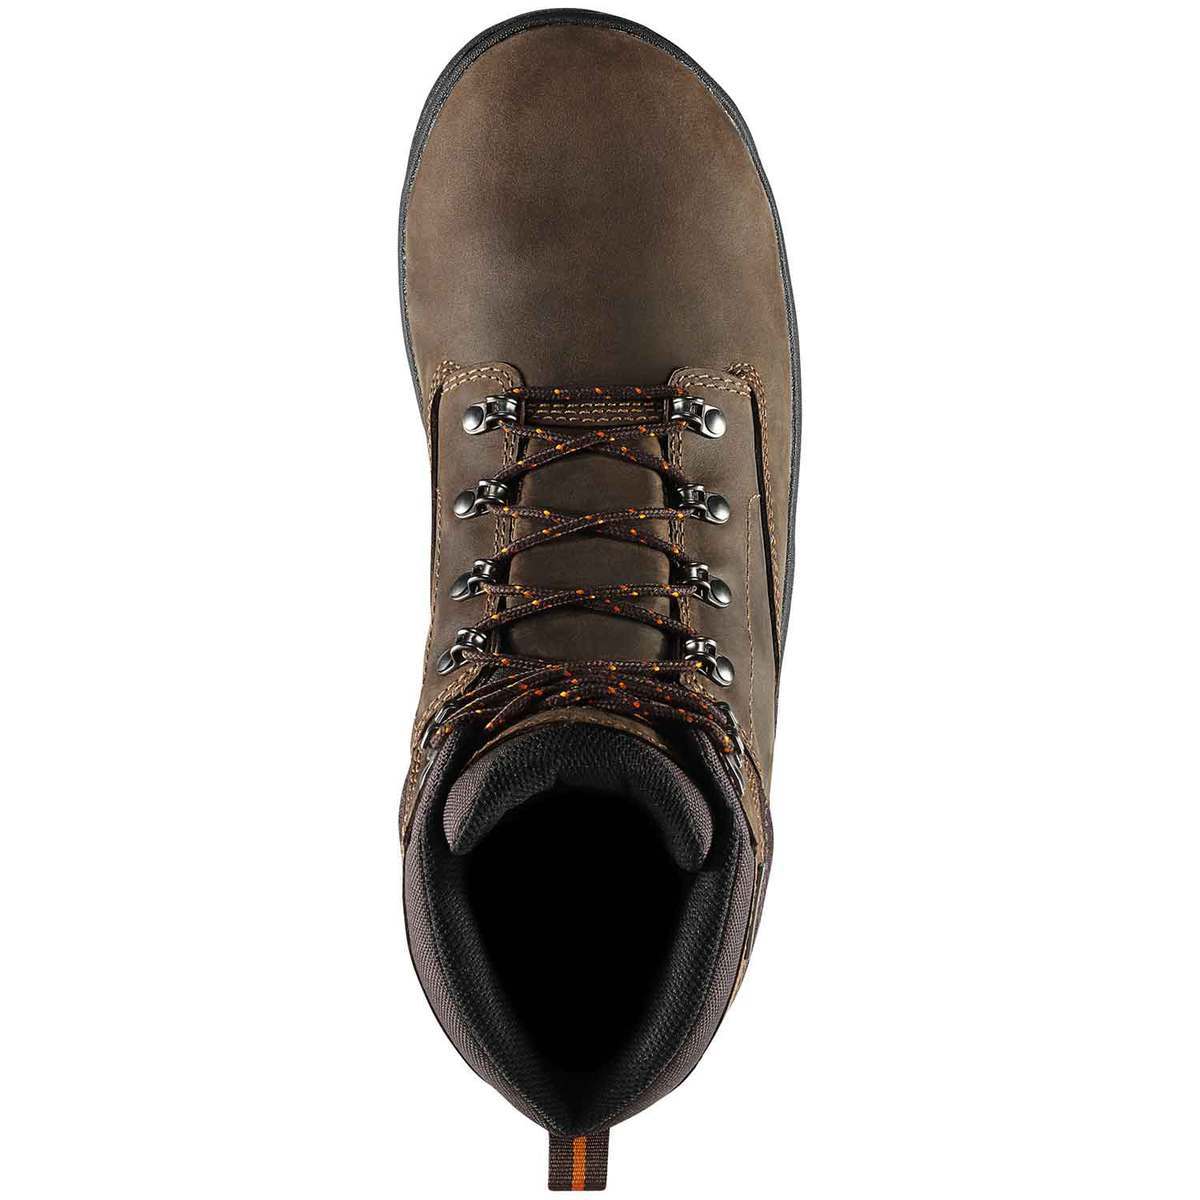 Danner Men's Crafter Composite Toe Work Boots - Brown - Size 14 EE ...